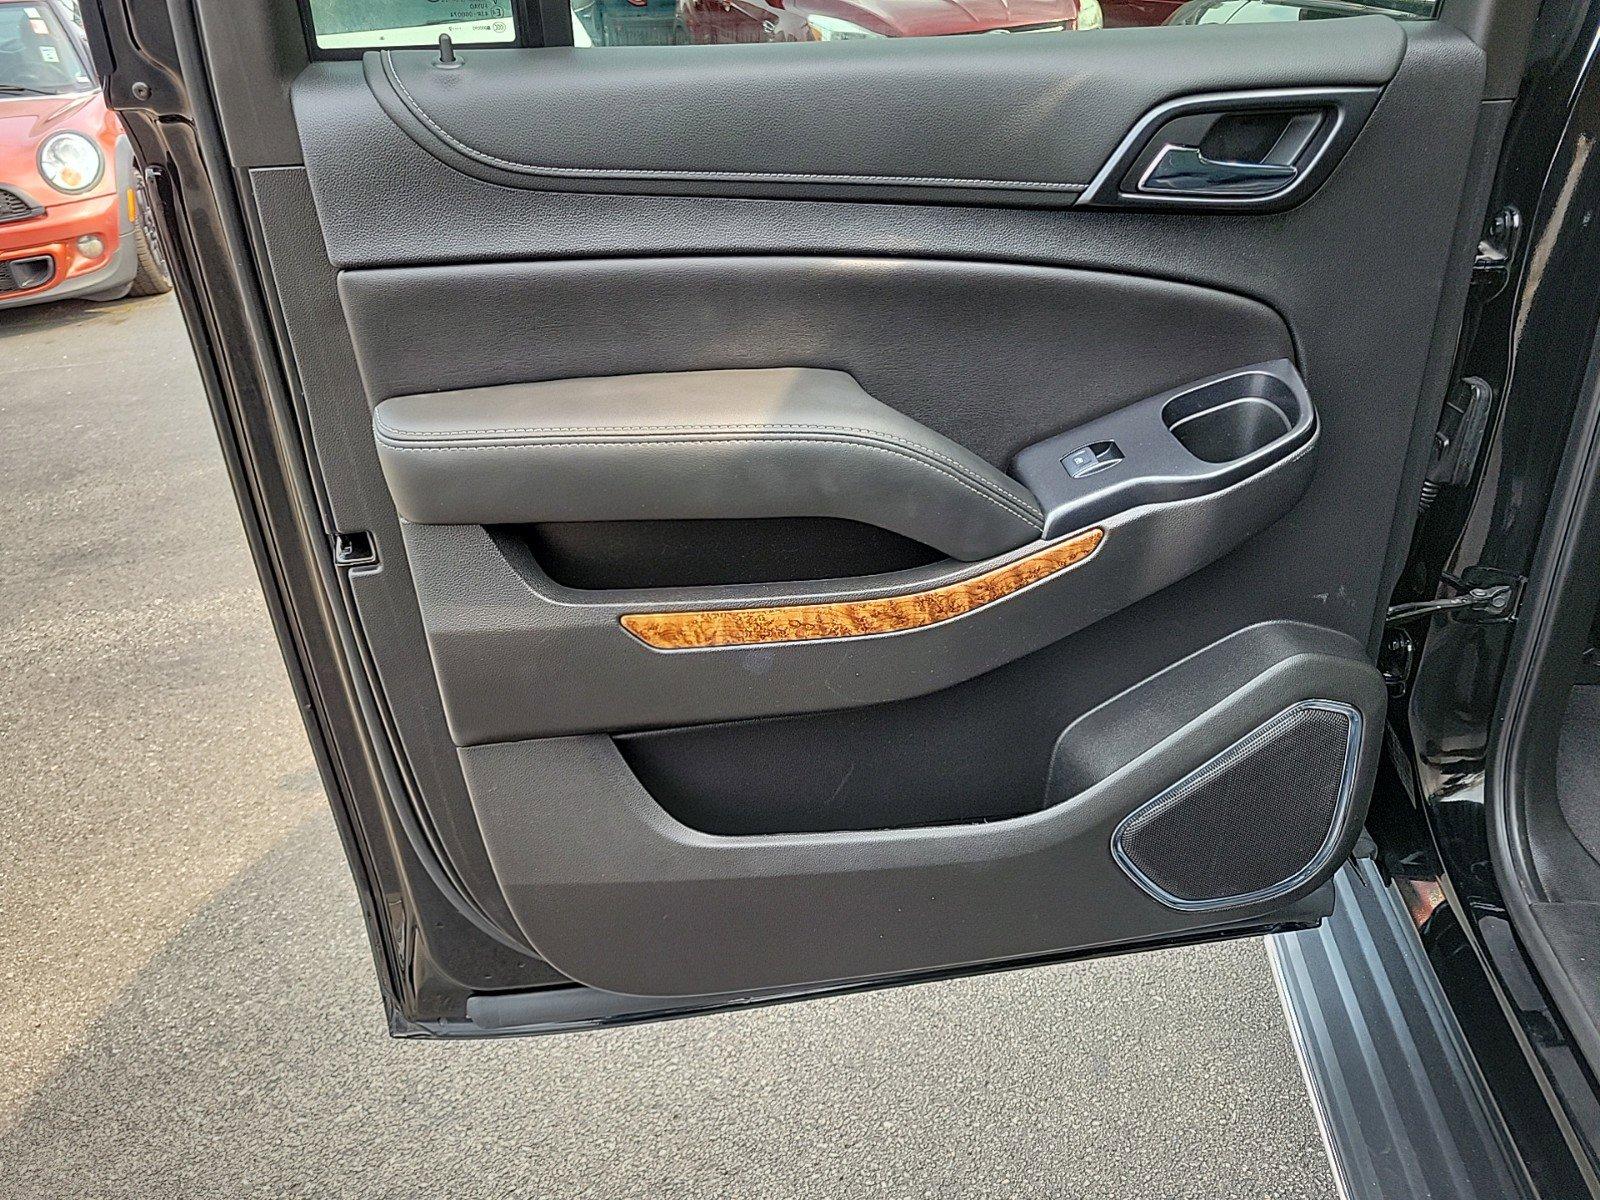 2019 Chevrolet Suburban Vehicle Photo in Saint Charles, IL 60174